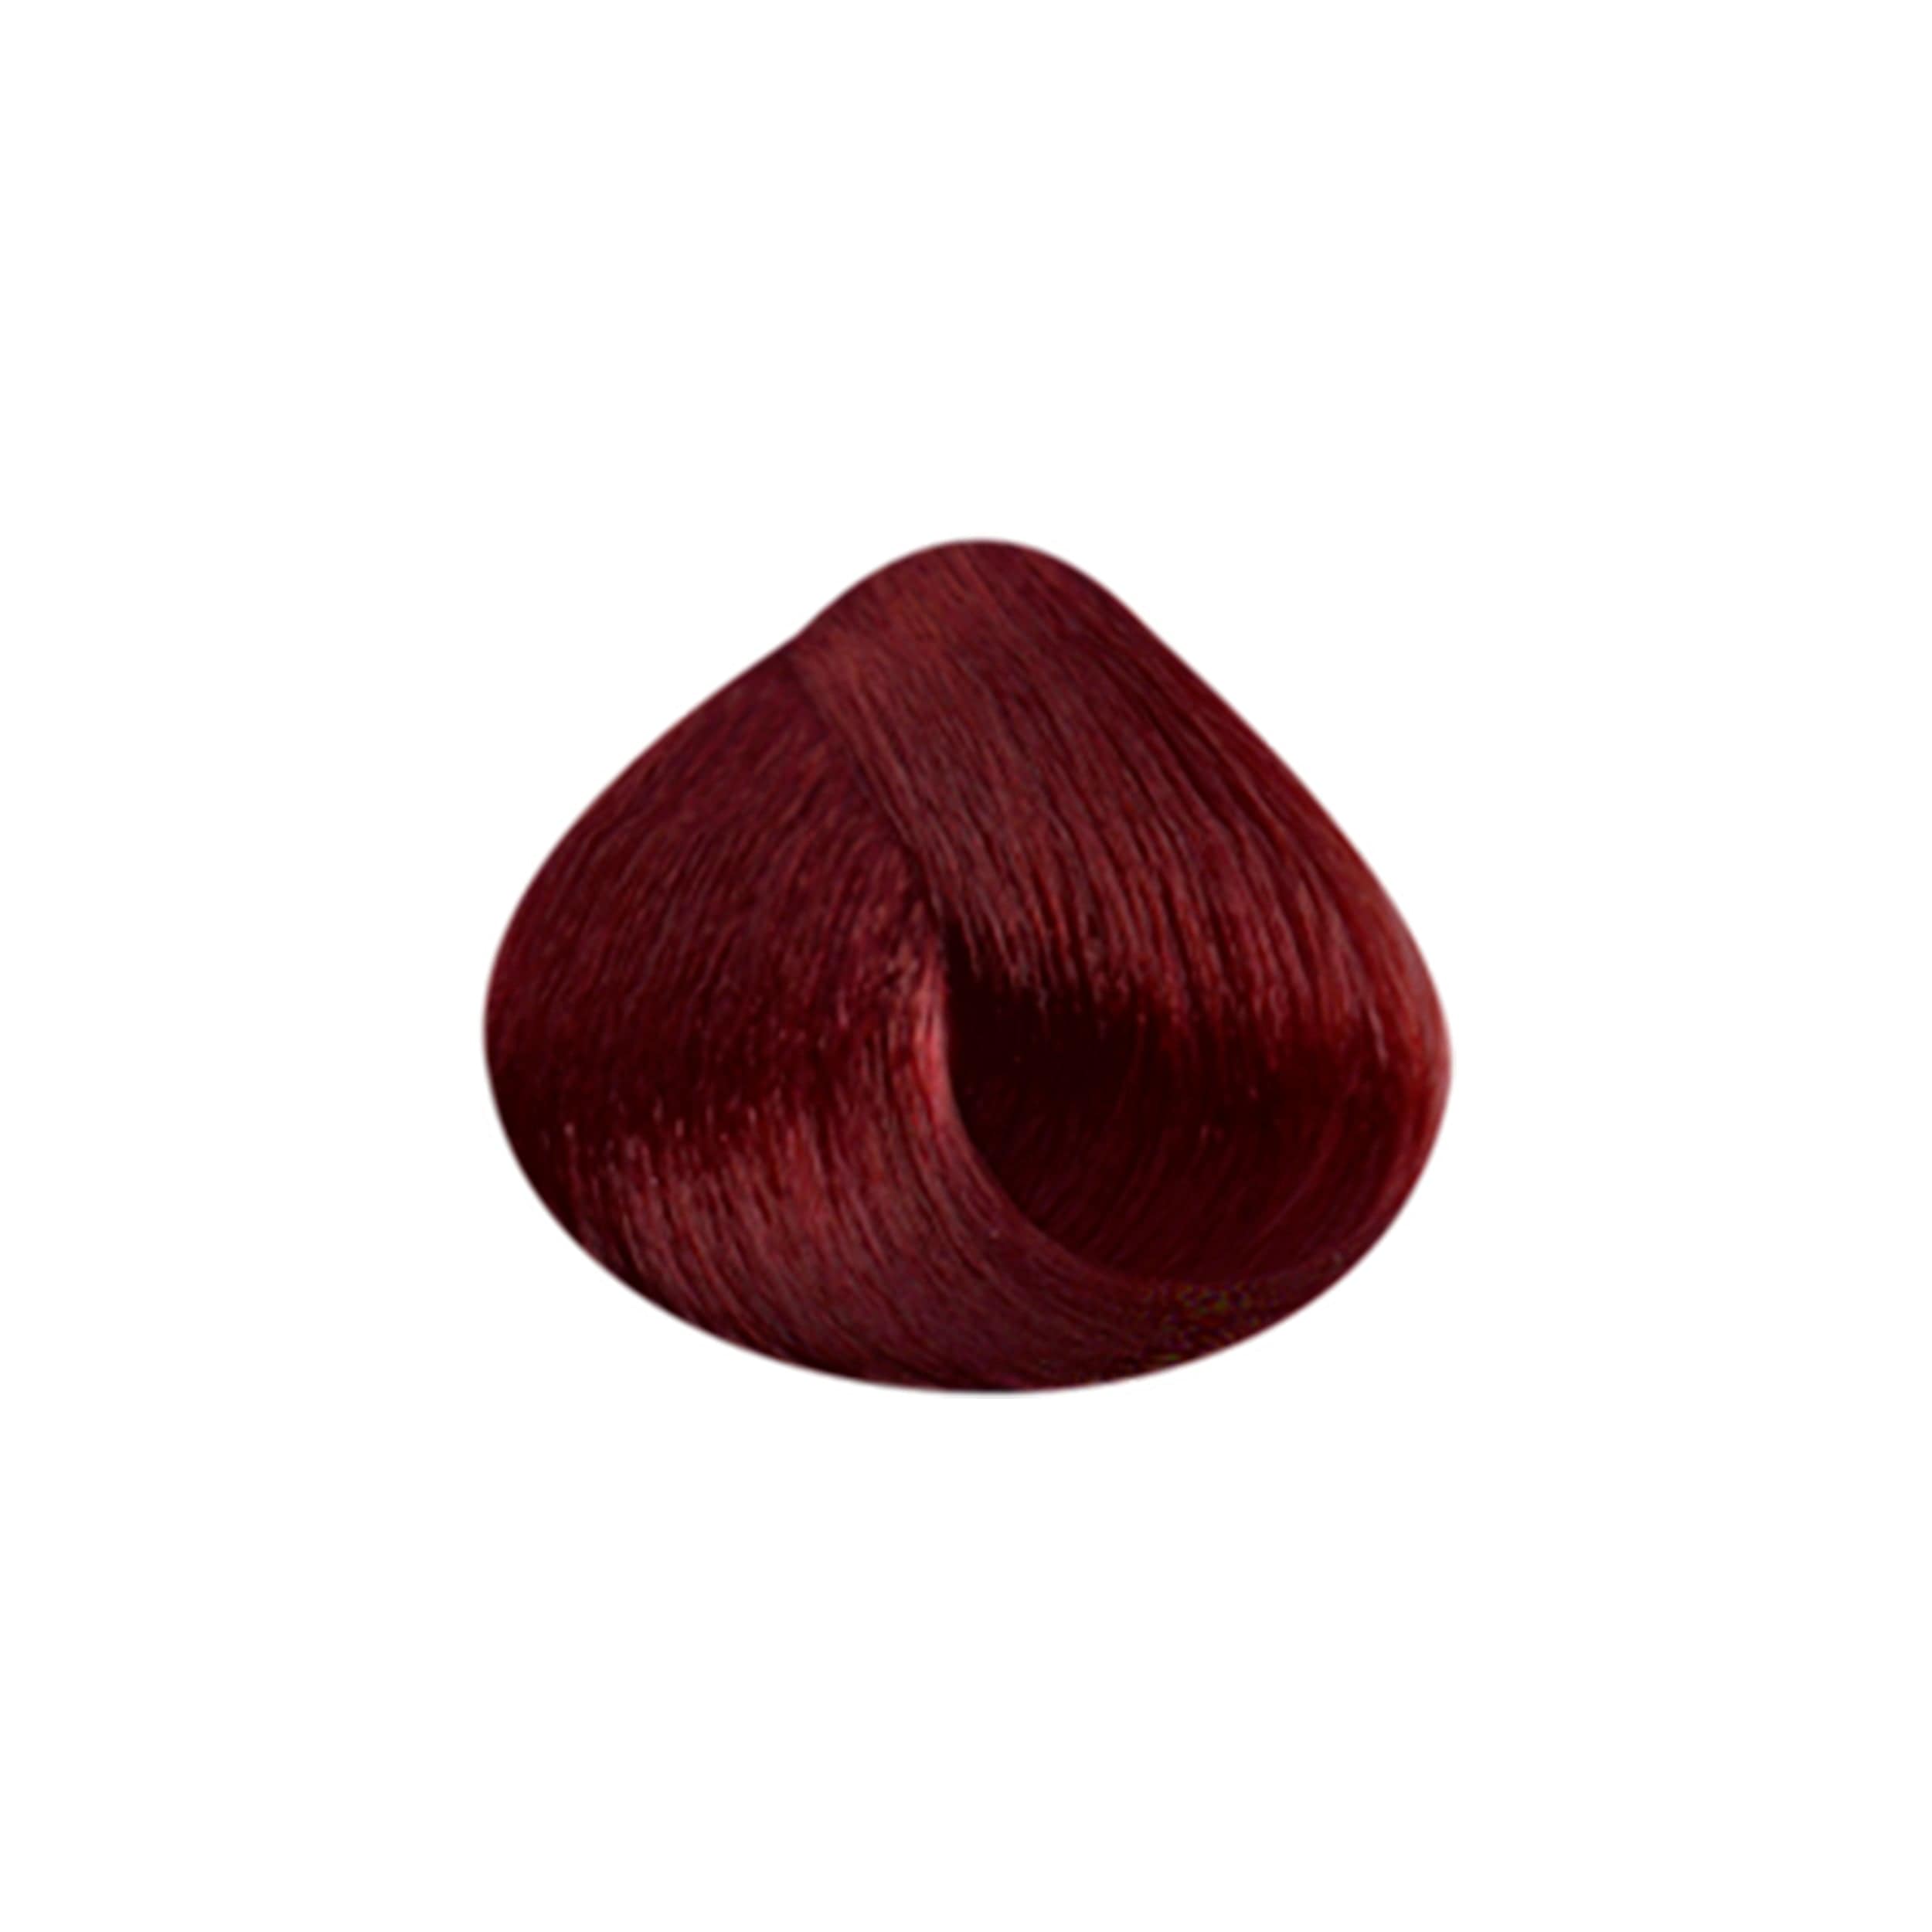 Tutto Hair Color - .46 Copper Red